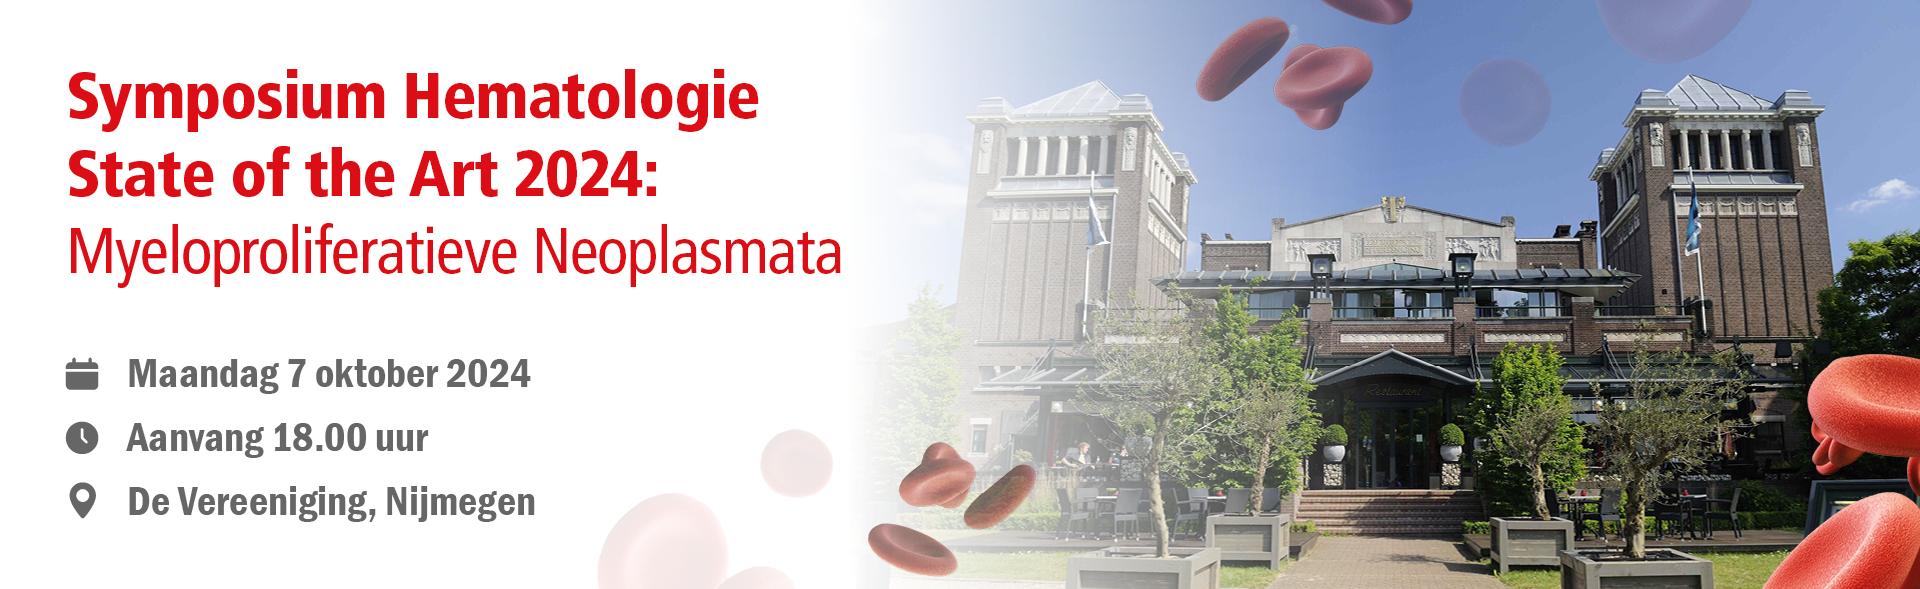 Symposium Hematologie State of the Art 2024: Myeloproliferatieve Neoplasmata 